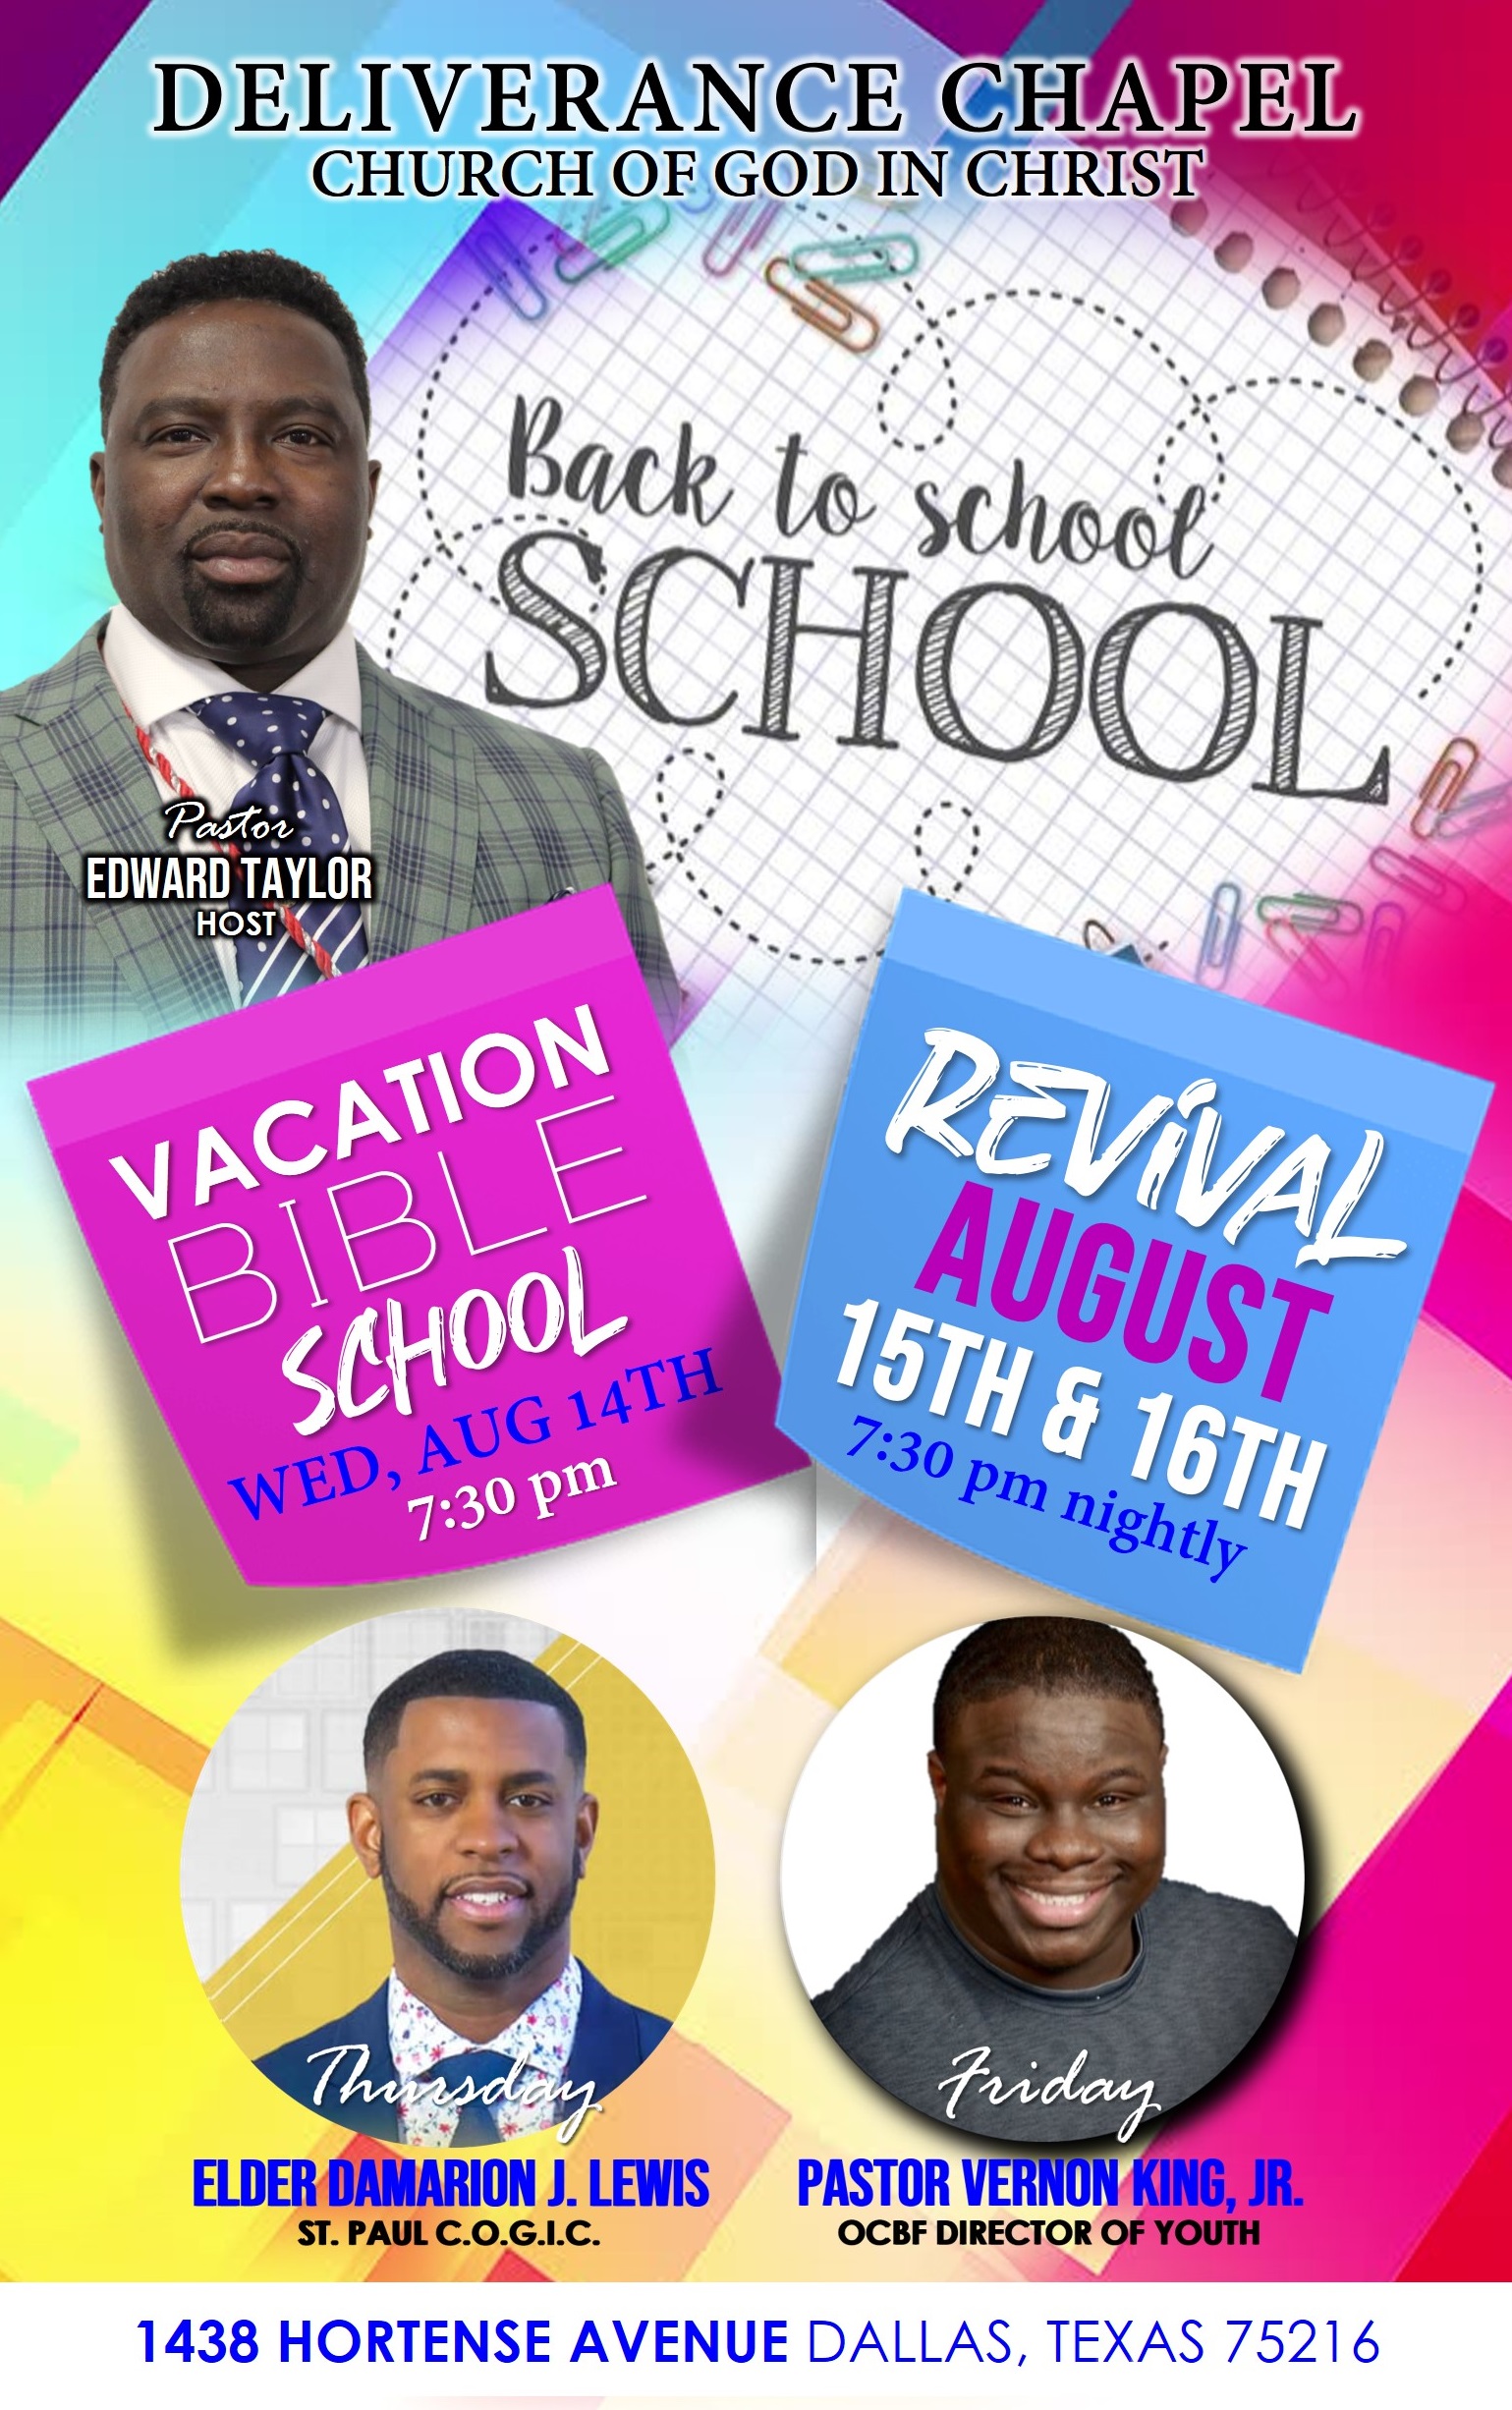 Vacation Bible School & Back to School Revival